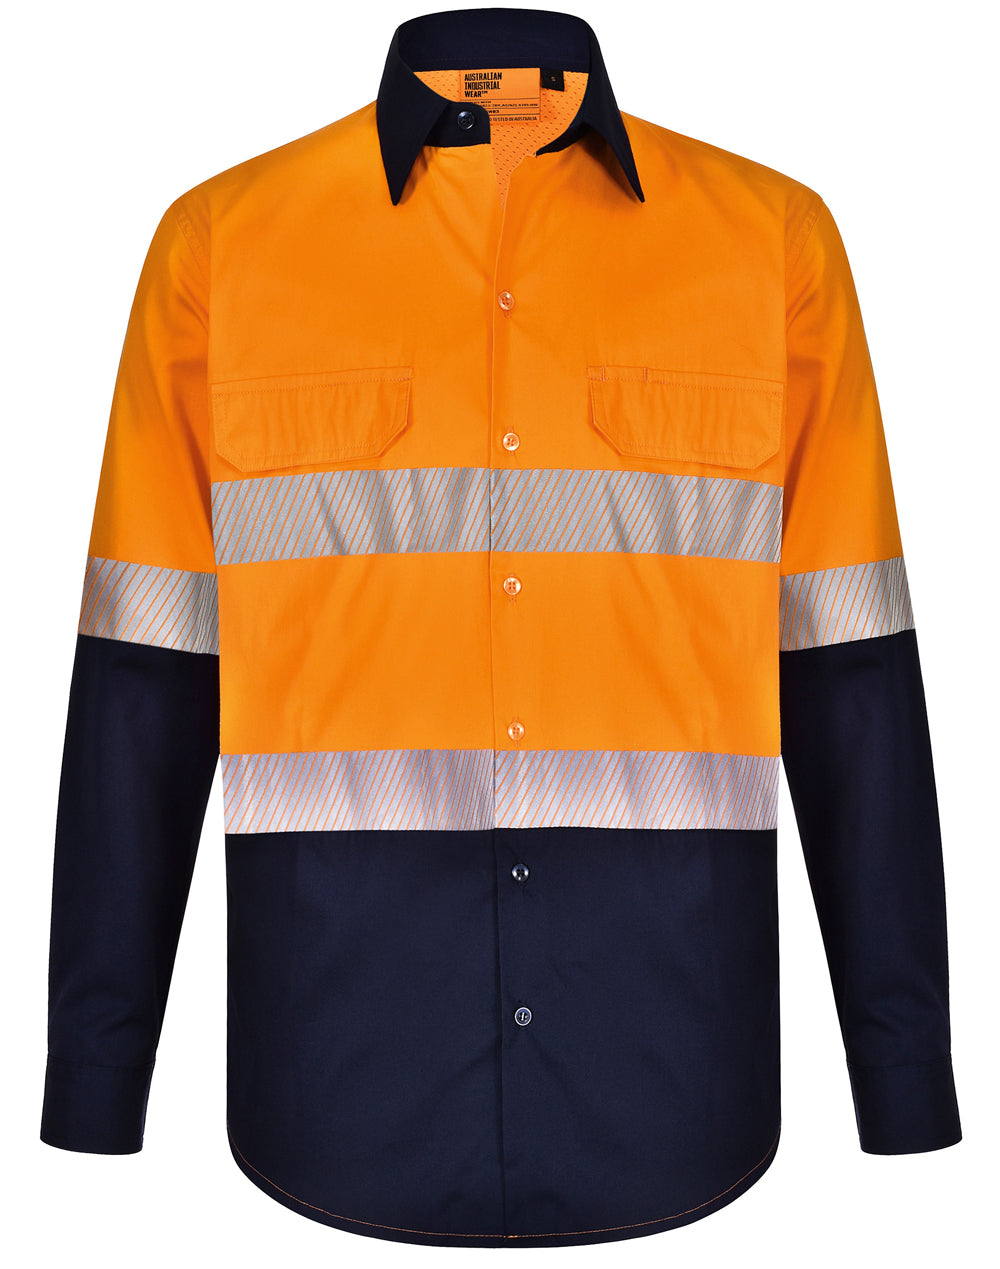 Winning Spirit Unisex HI VIS Cool-Breeze Safety LS Shirt (SEGMENTED TAPE) (SW83)